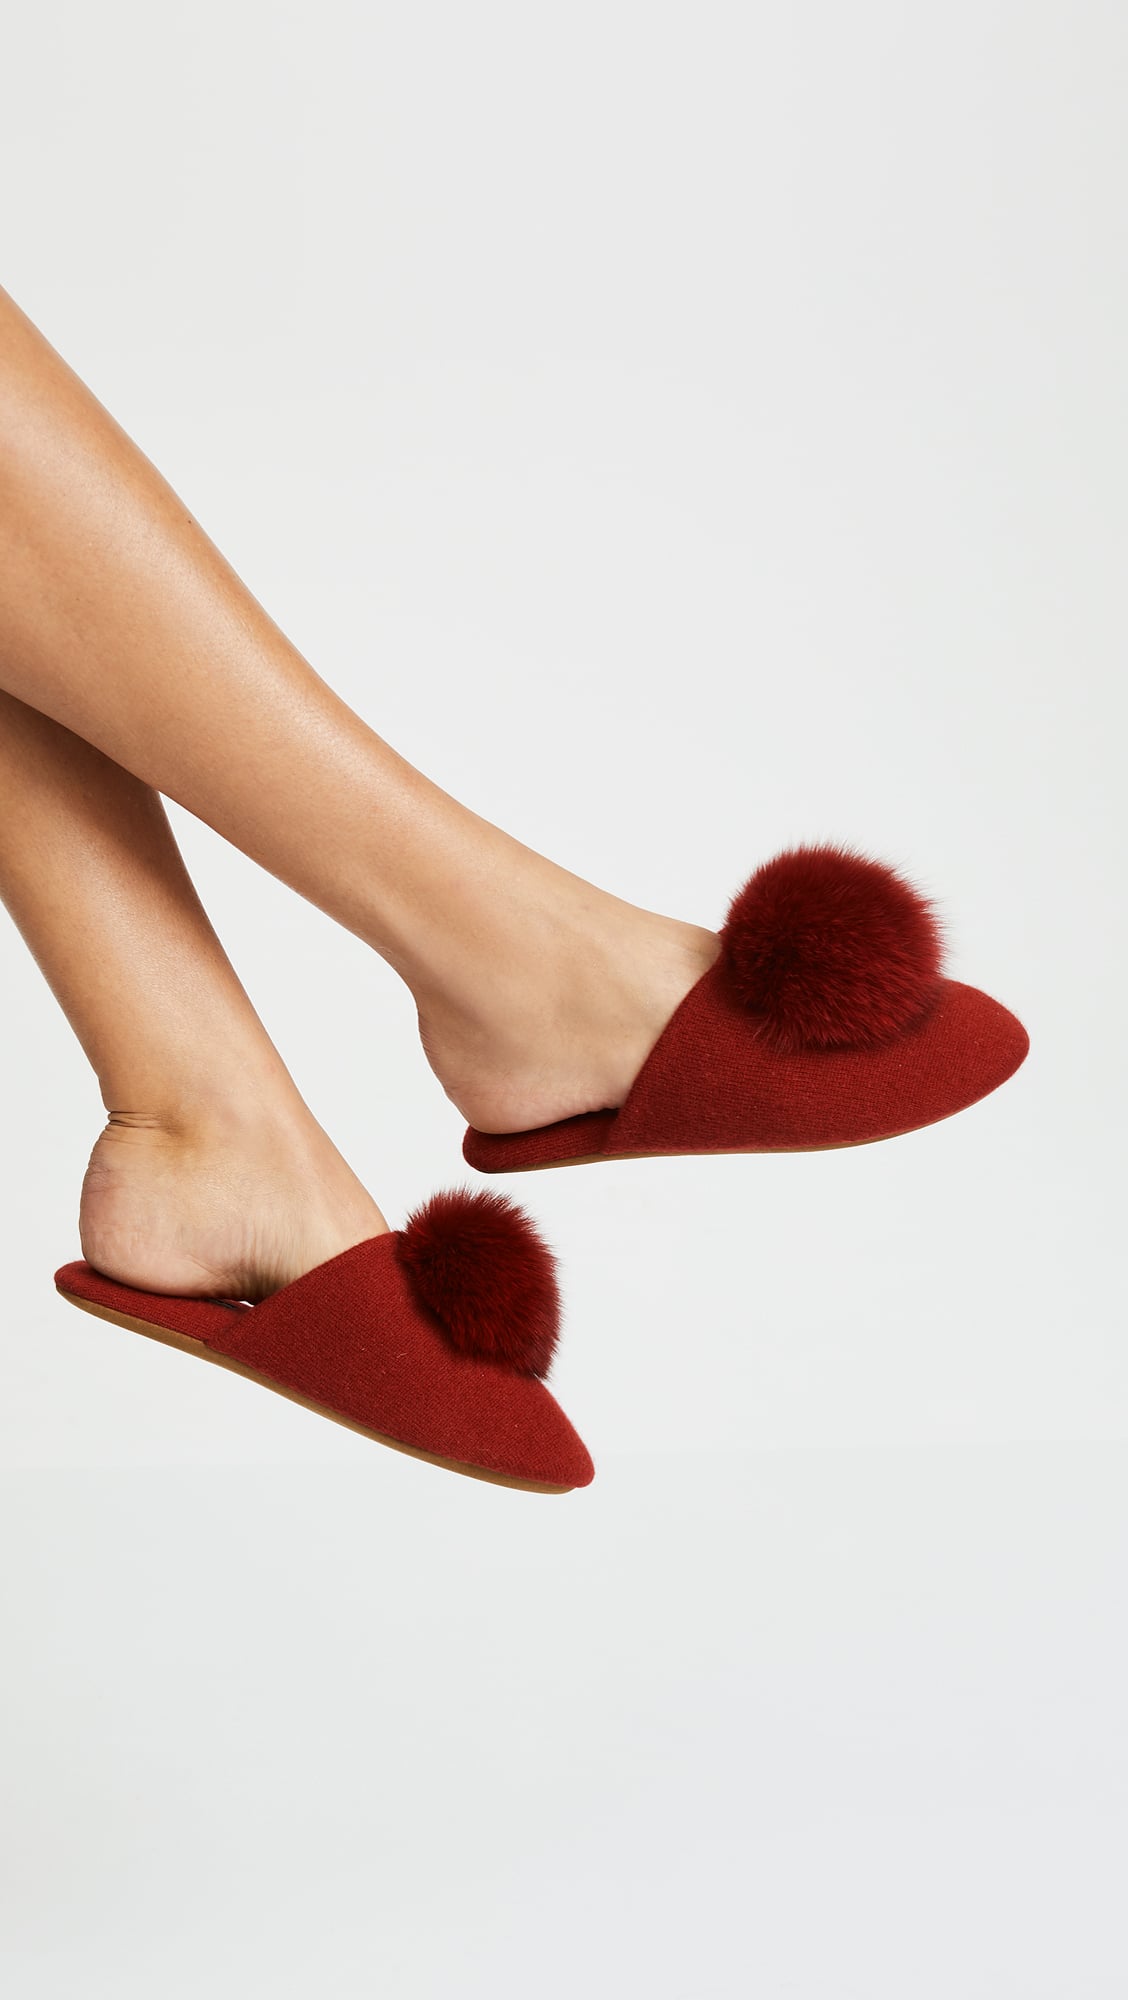 girls pom pom slippers